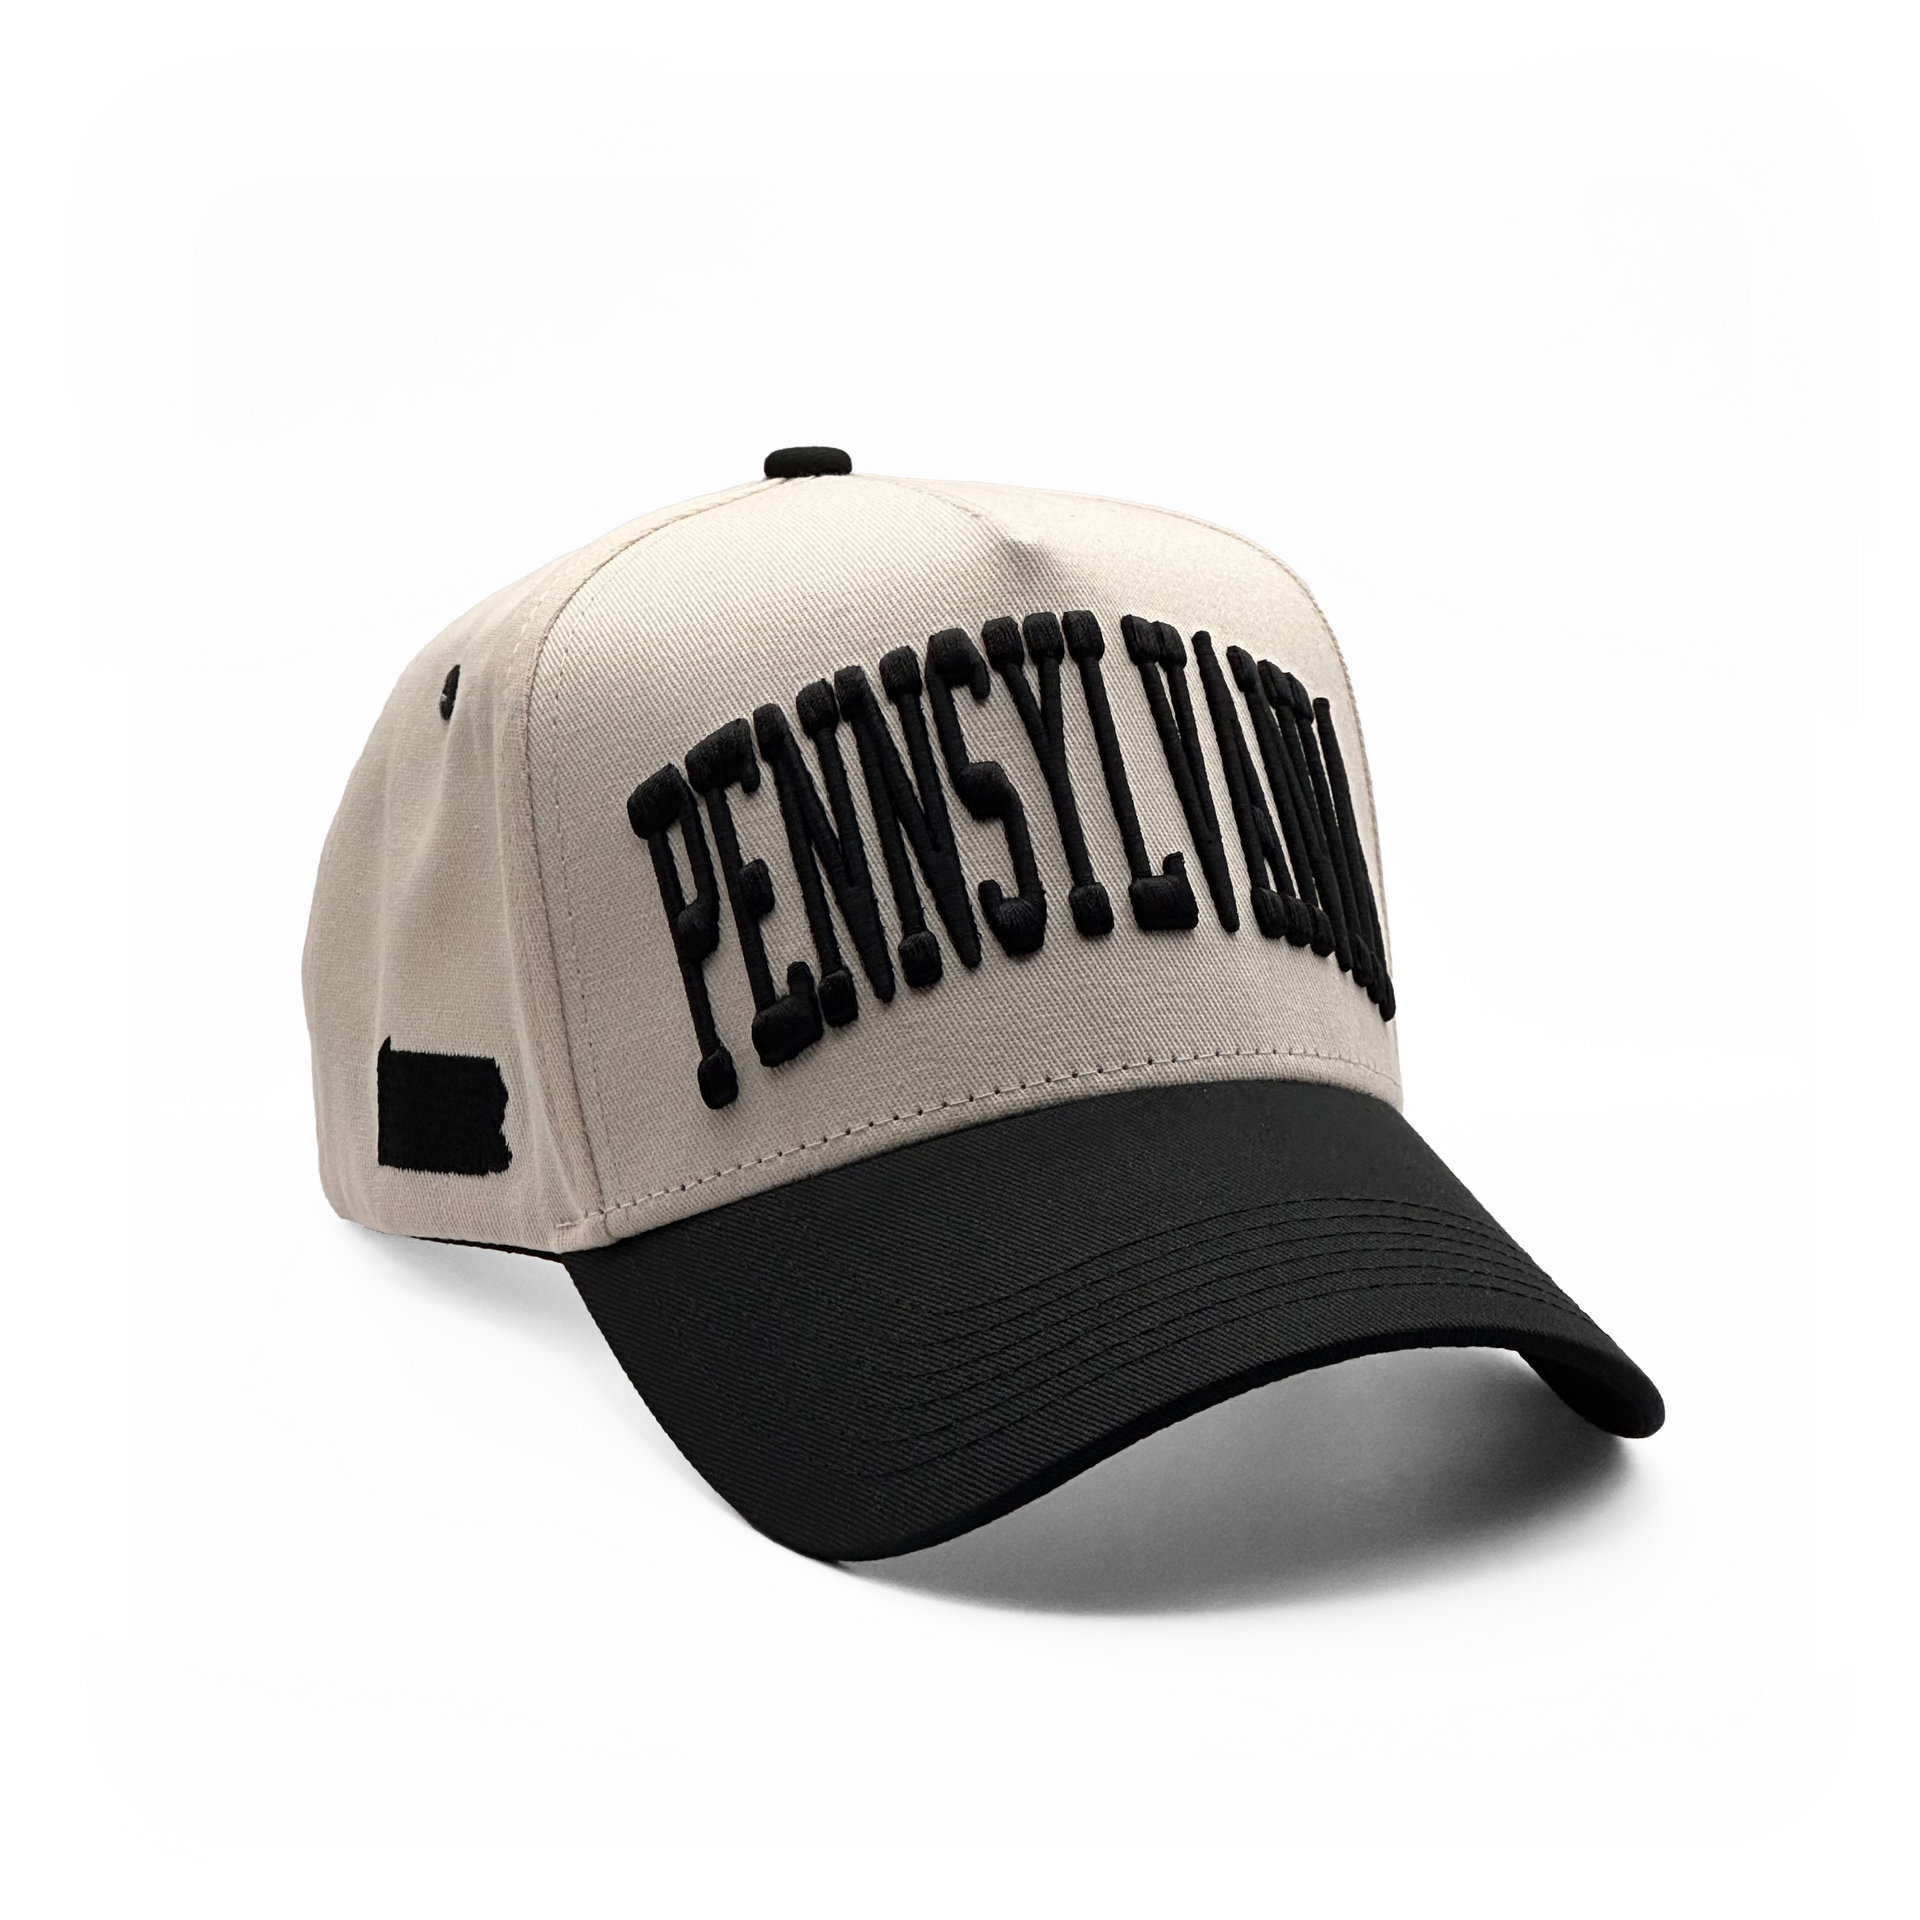  Pennsylvania Hat